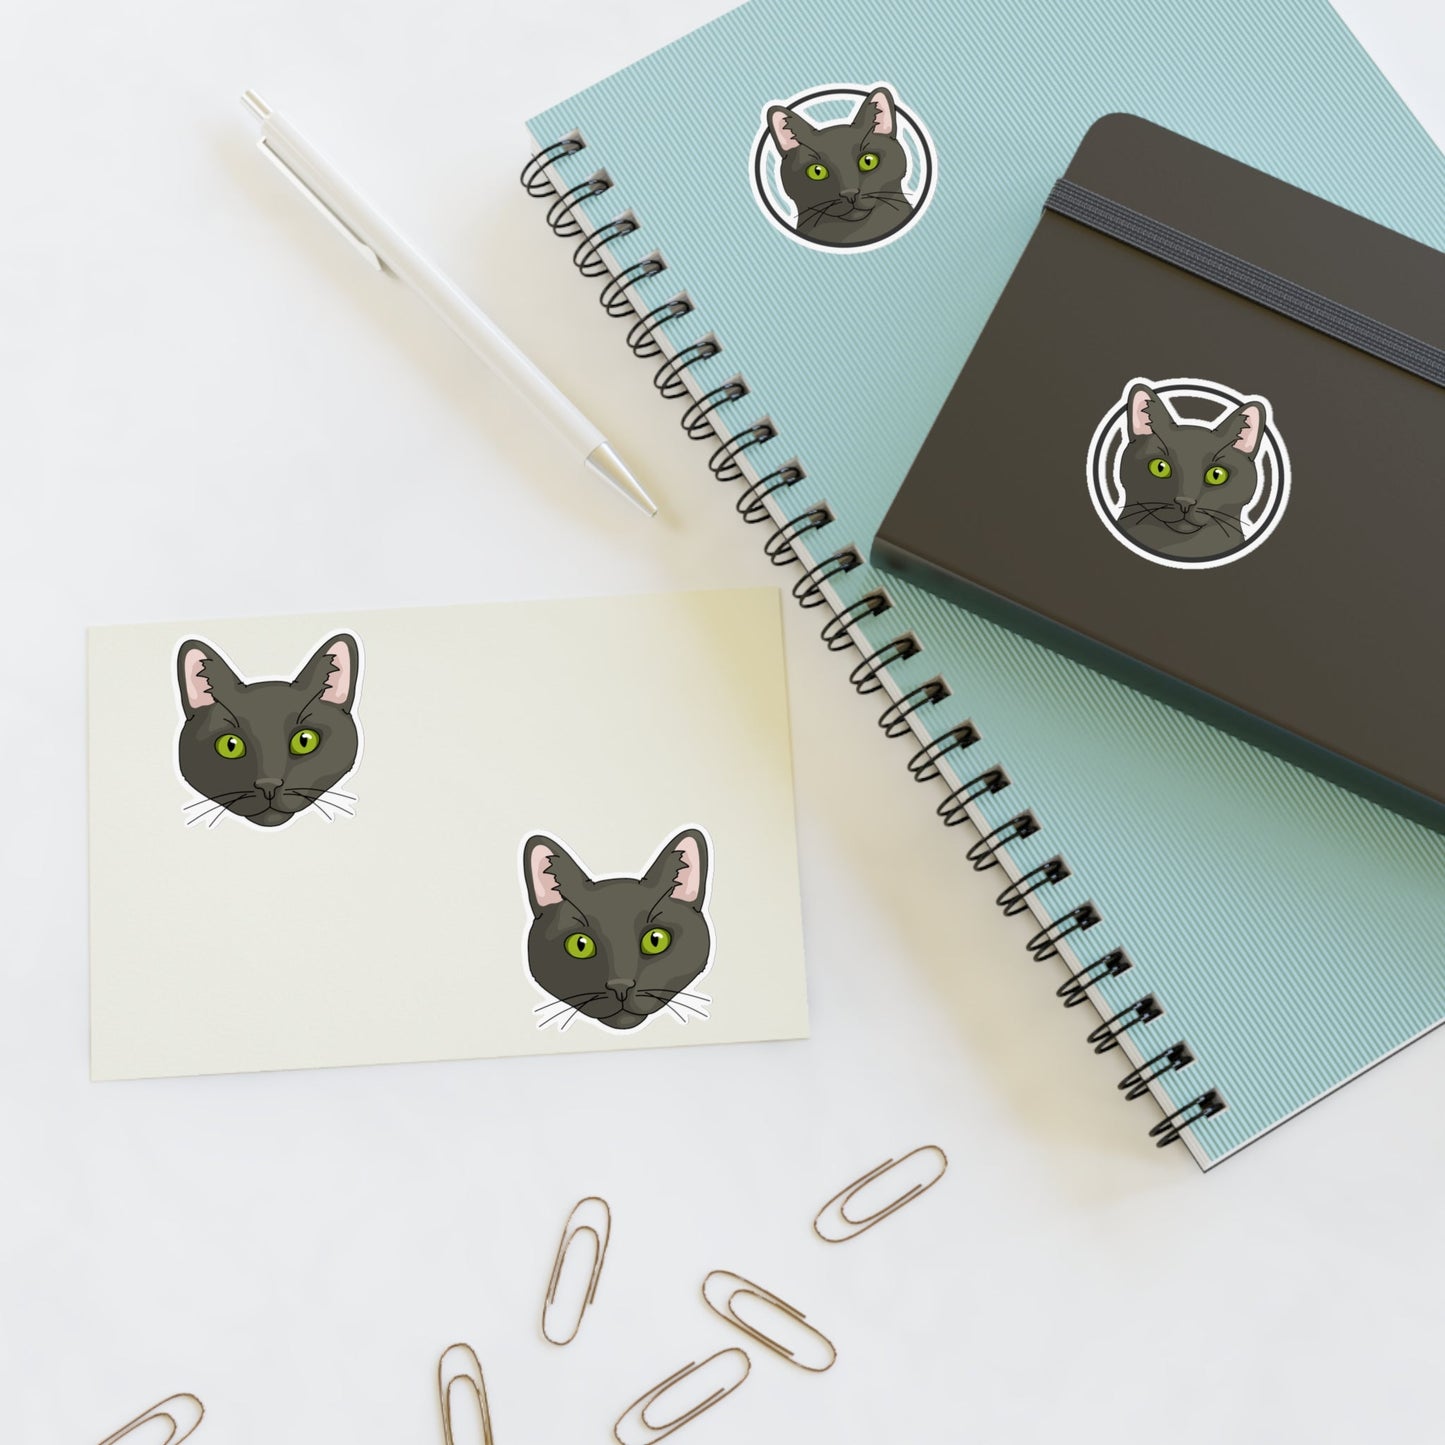 DSH Black Cat | Sticker Sheet - Detezi Designs-28736725122426856150